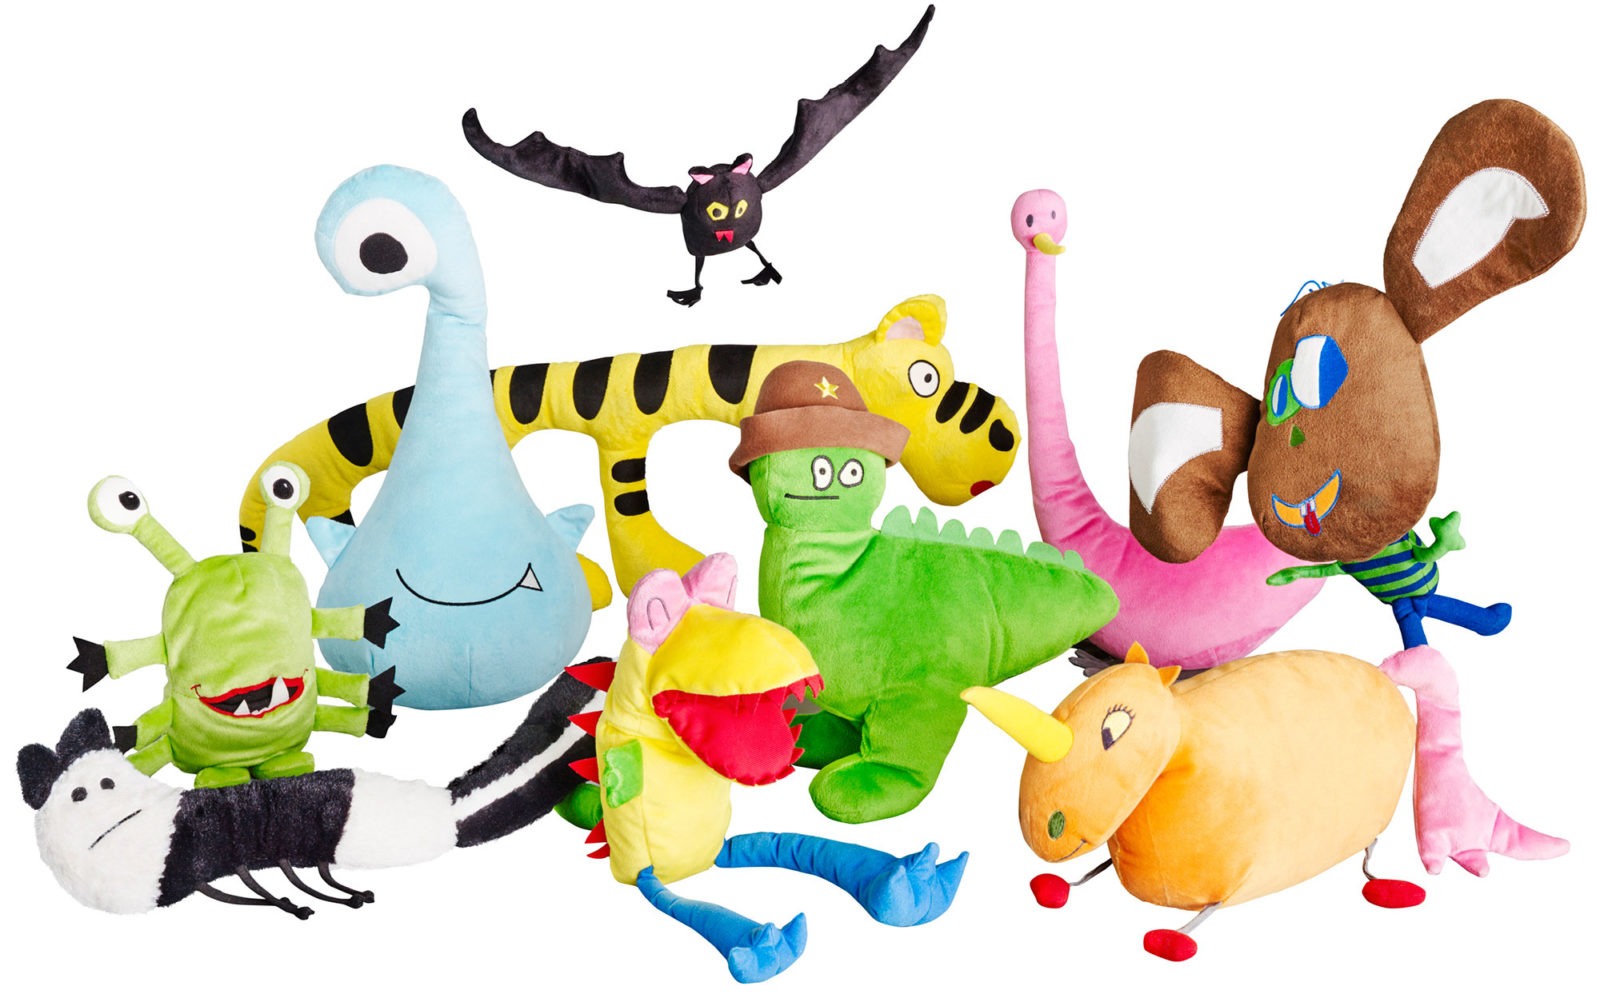 Pile of imaginative soft toys including an orange unicorn and a very thin tiger, SAGOSKATT.